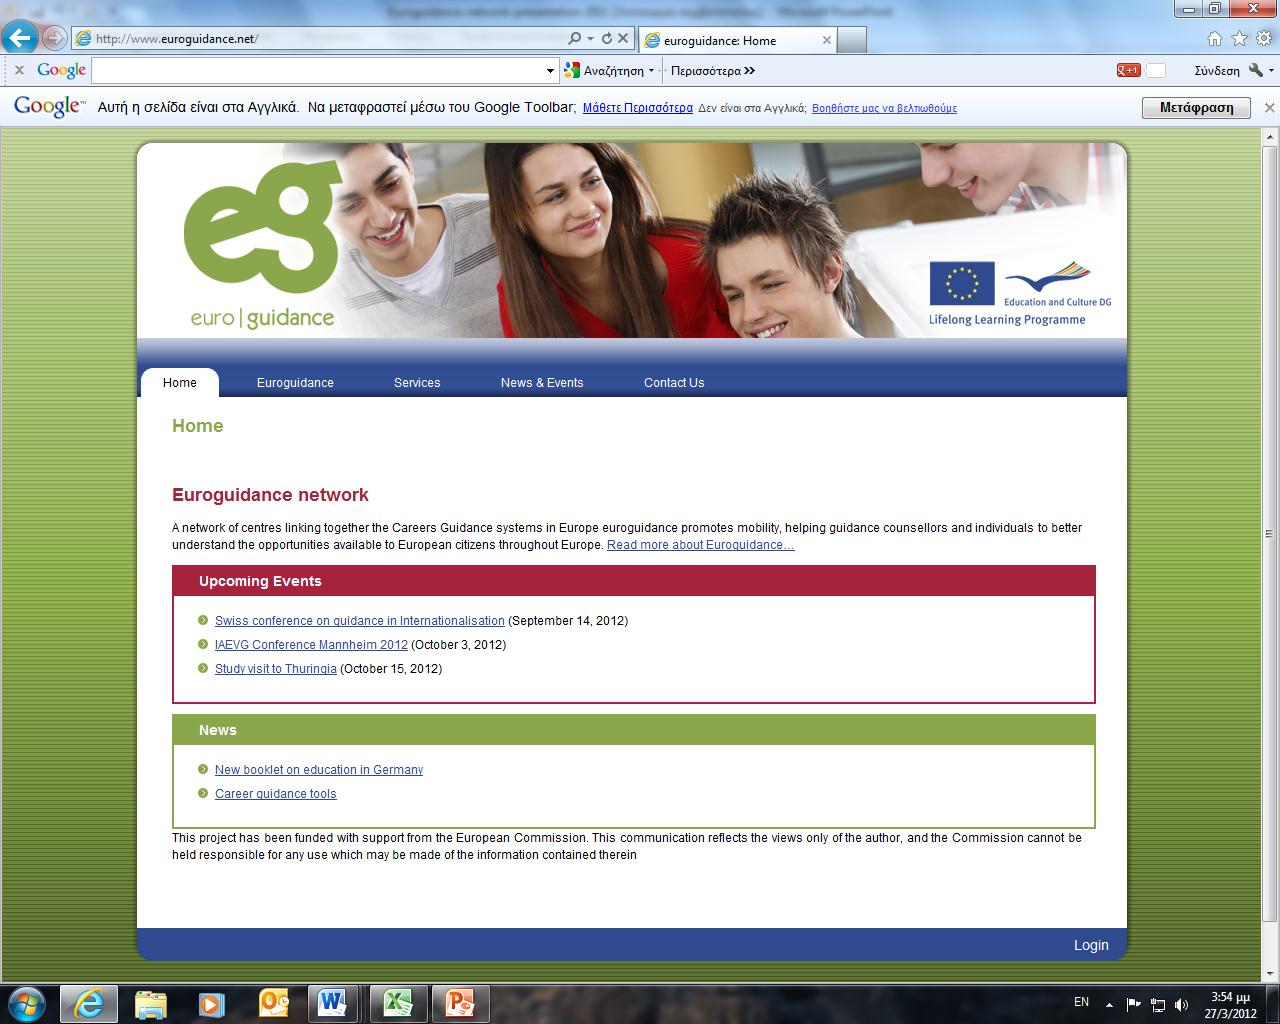 Web service: www.euroguidance.